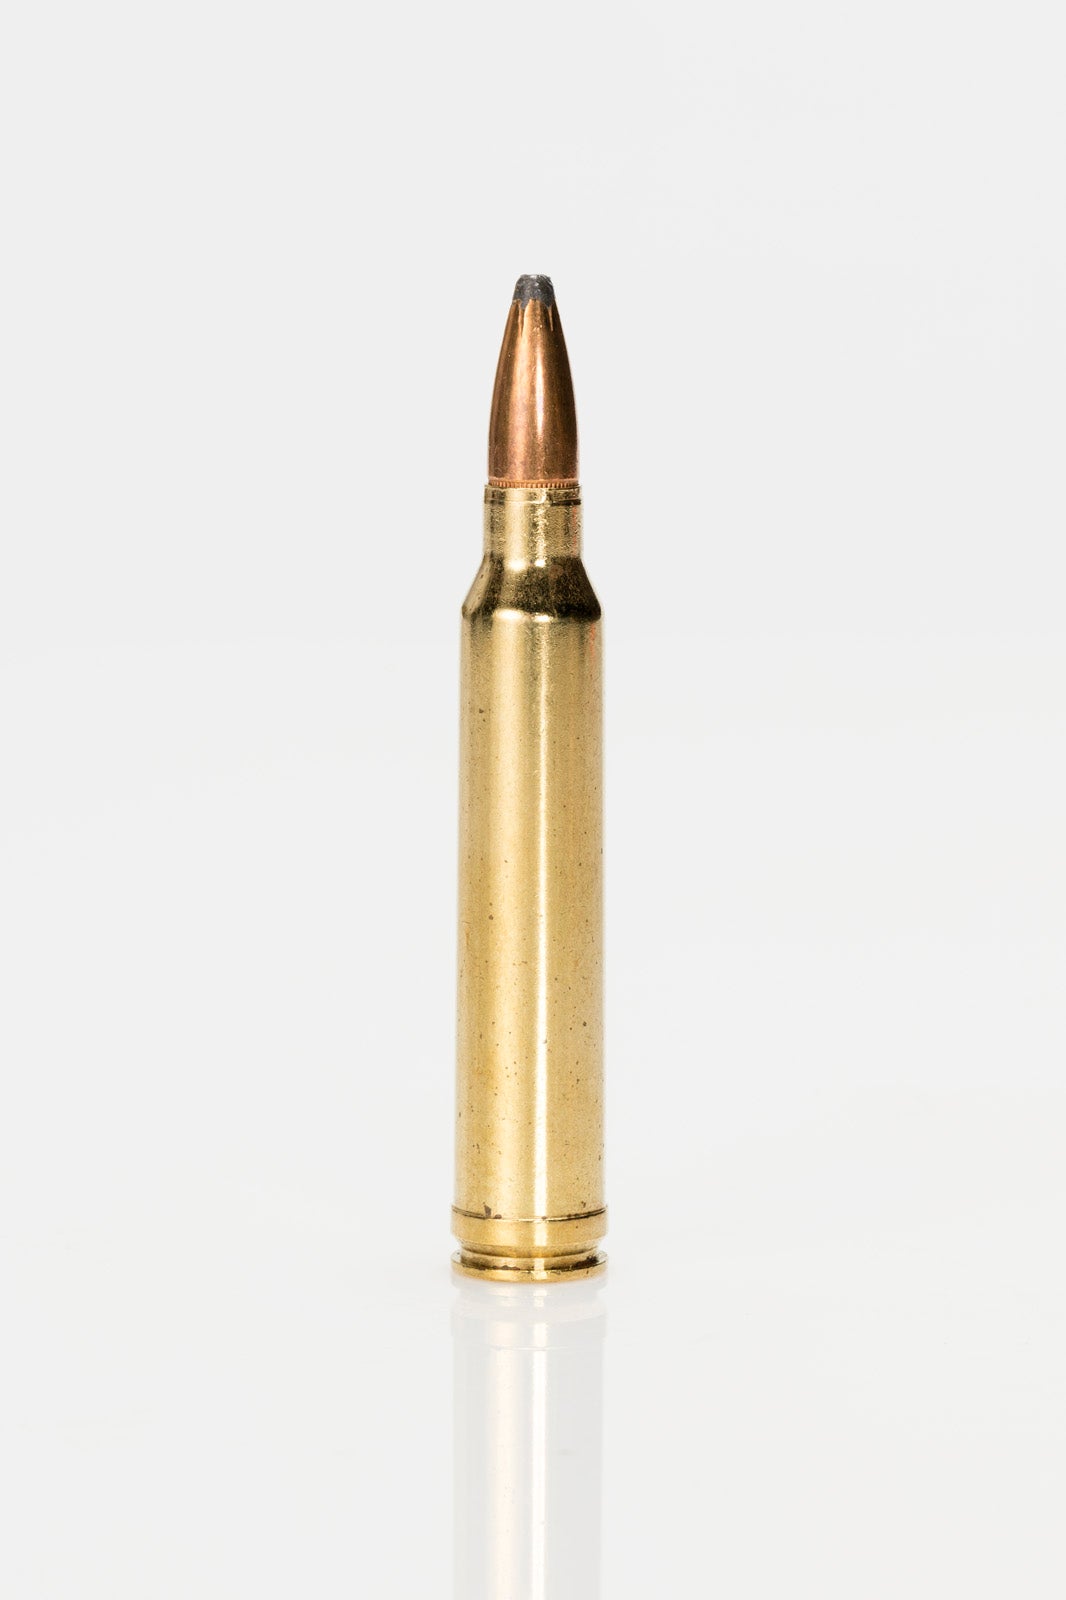 300 Winchester Magnum cartridge